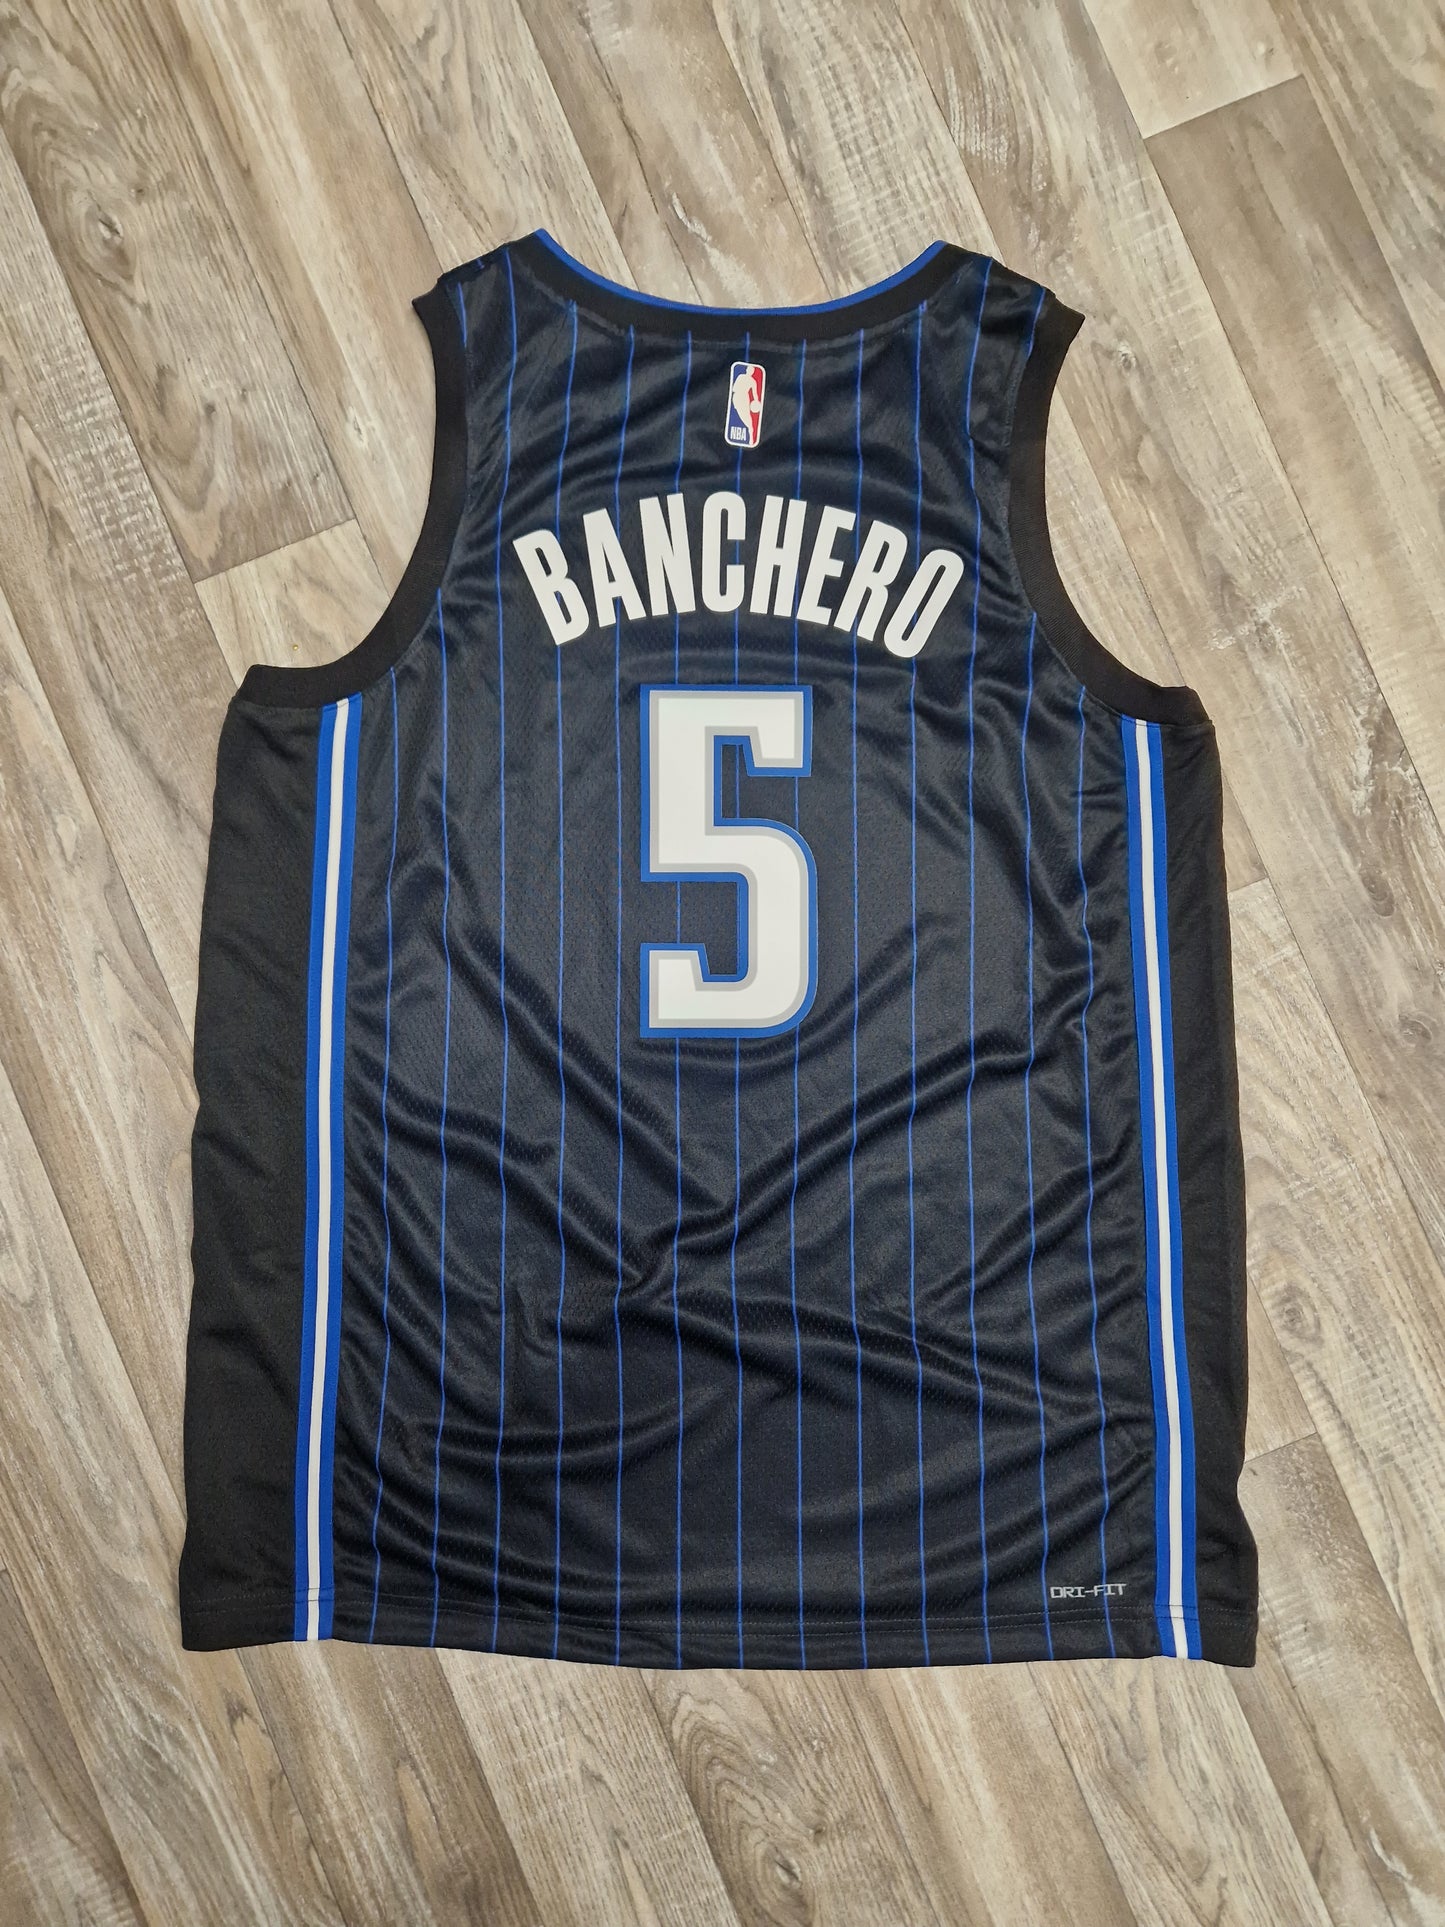 Pablo Banchero Orlando Magic Jersey Size XL